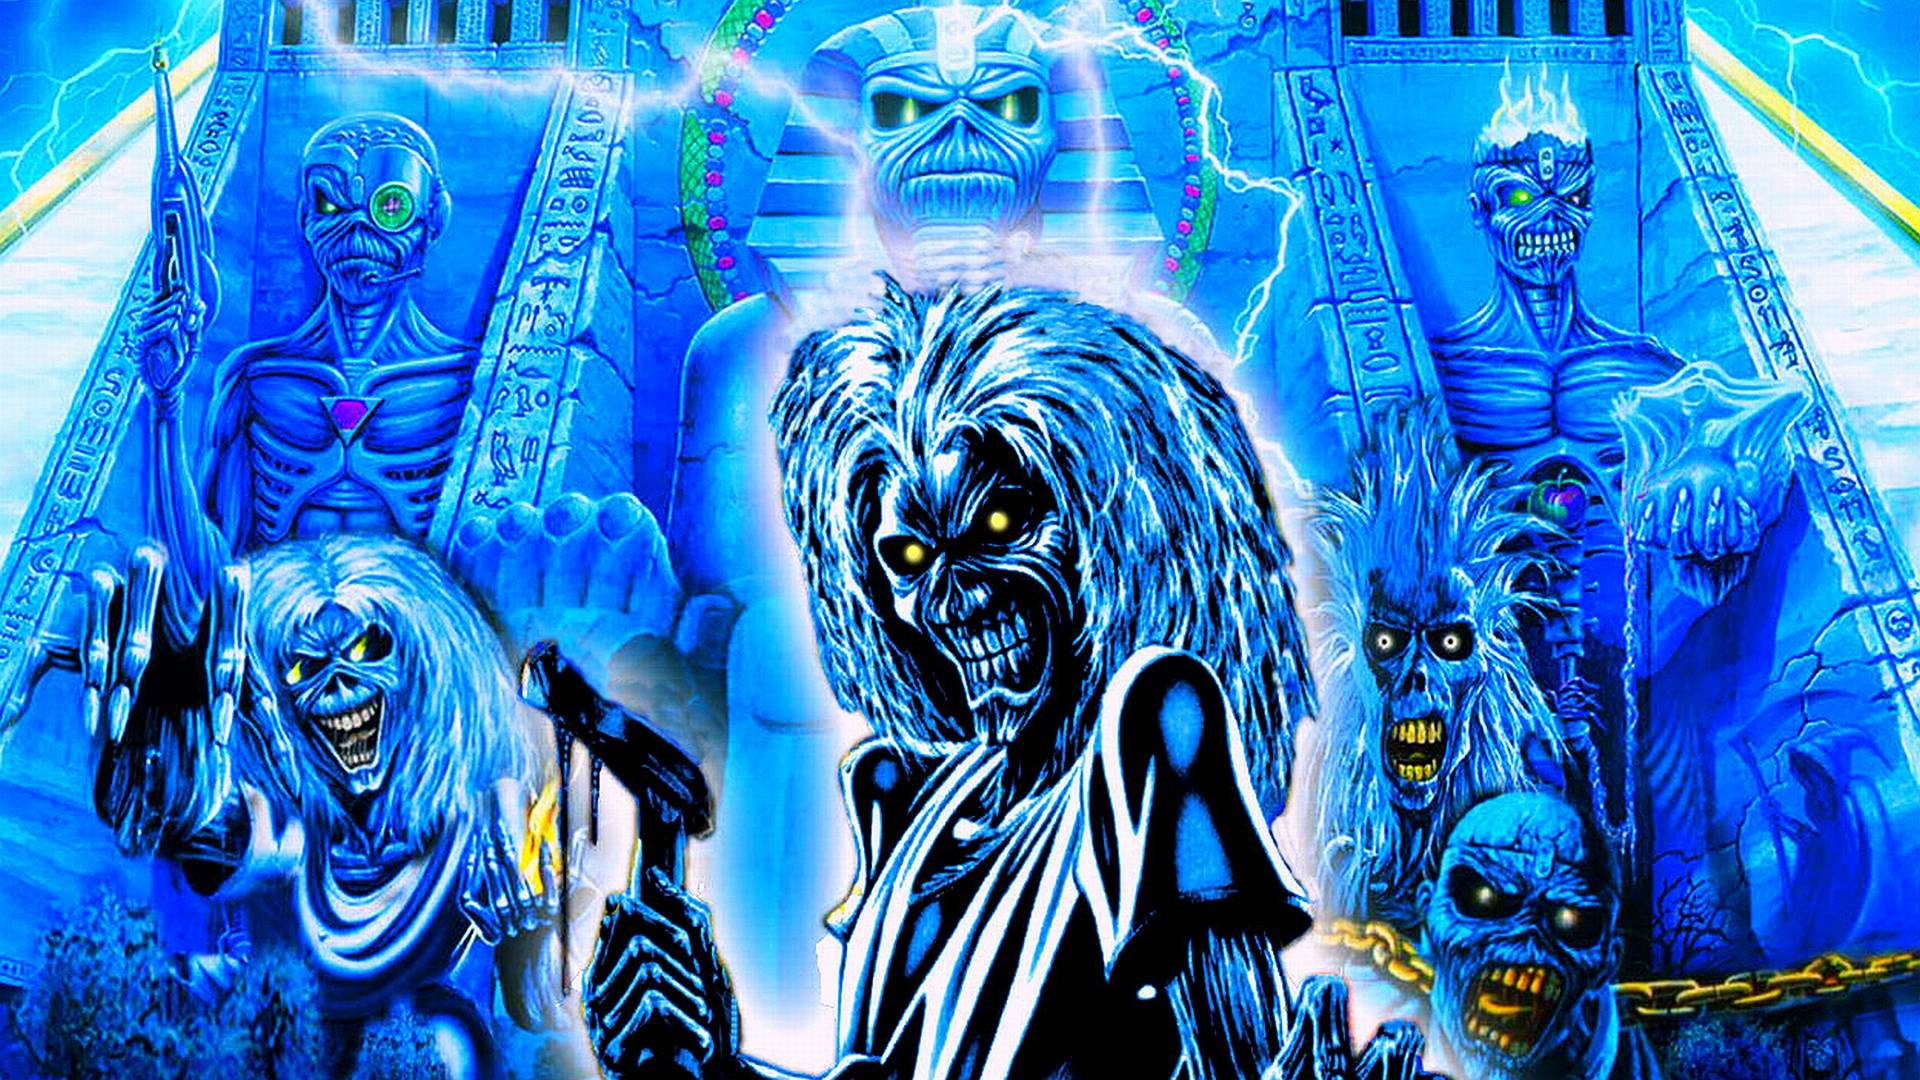 Iron Maiden Wallpaper. Iron Maiden Background